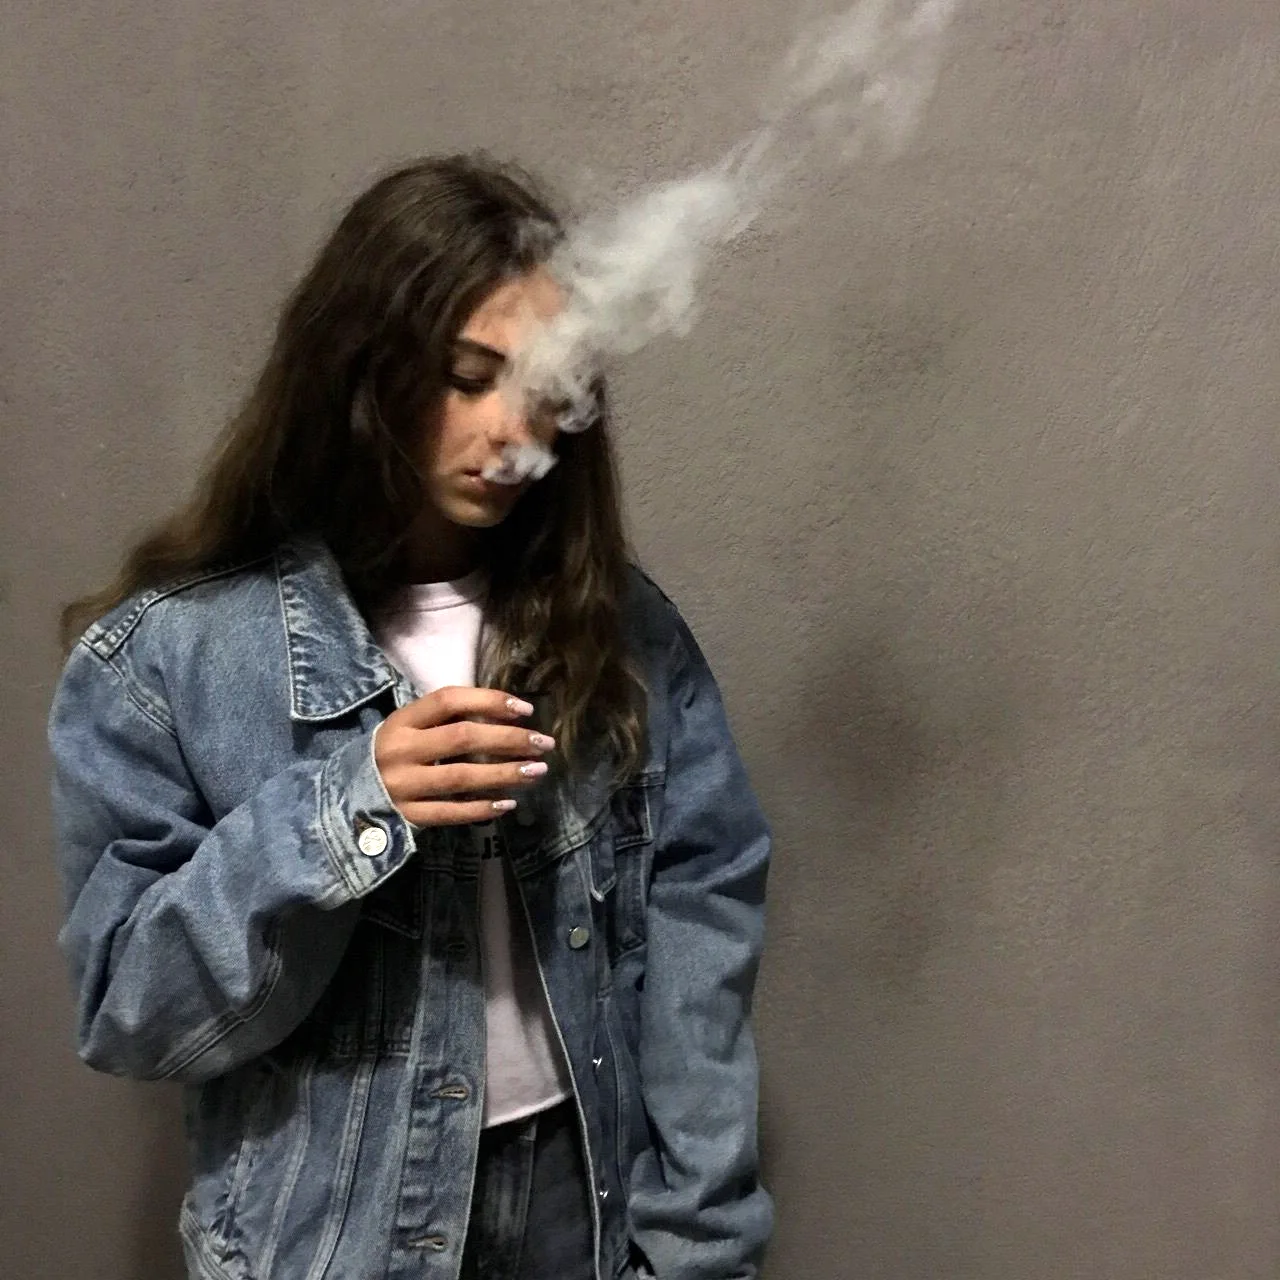 Курящая девушка подросток